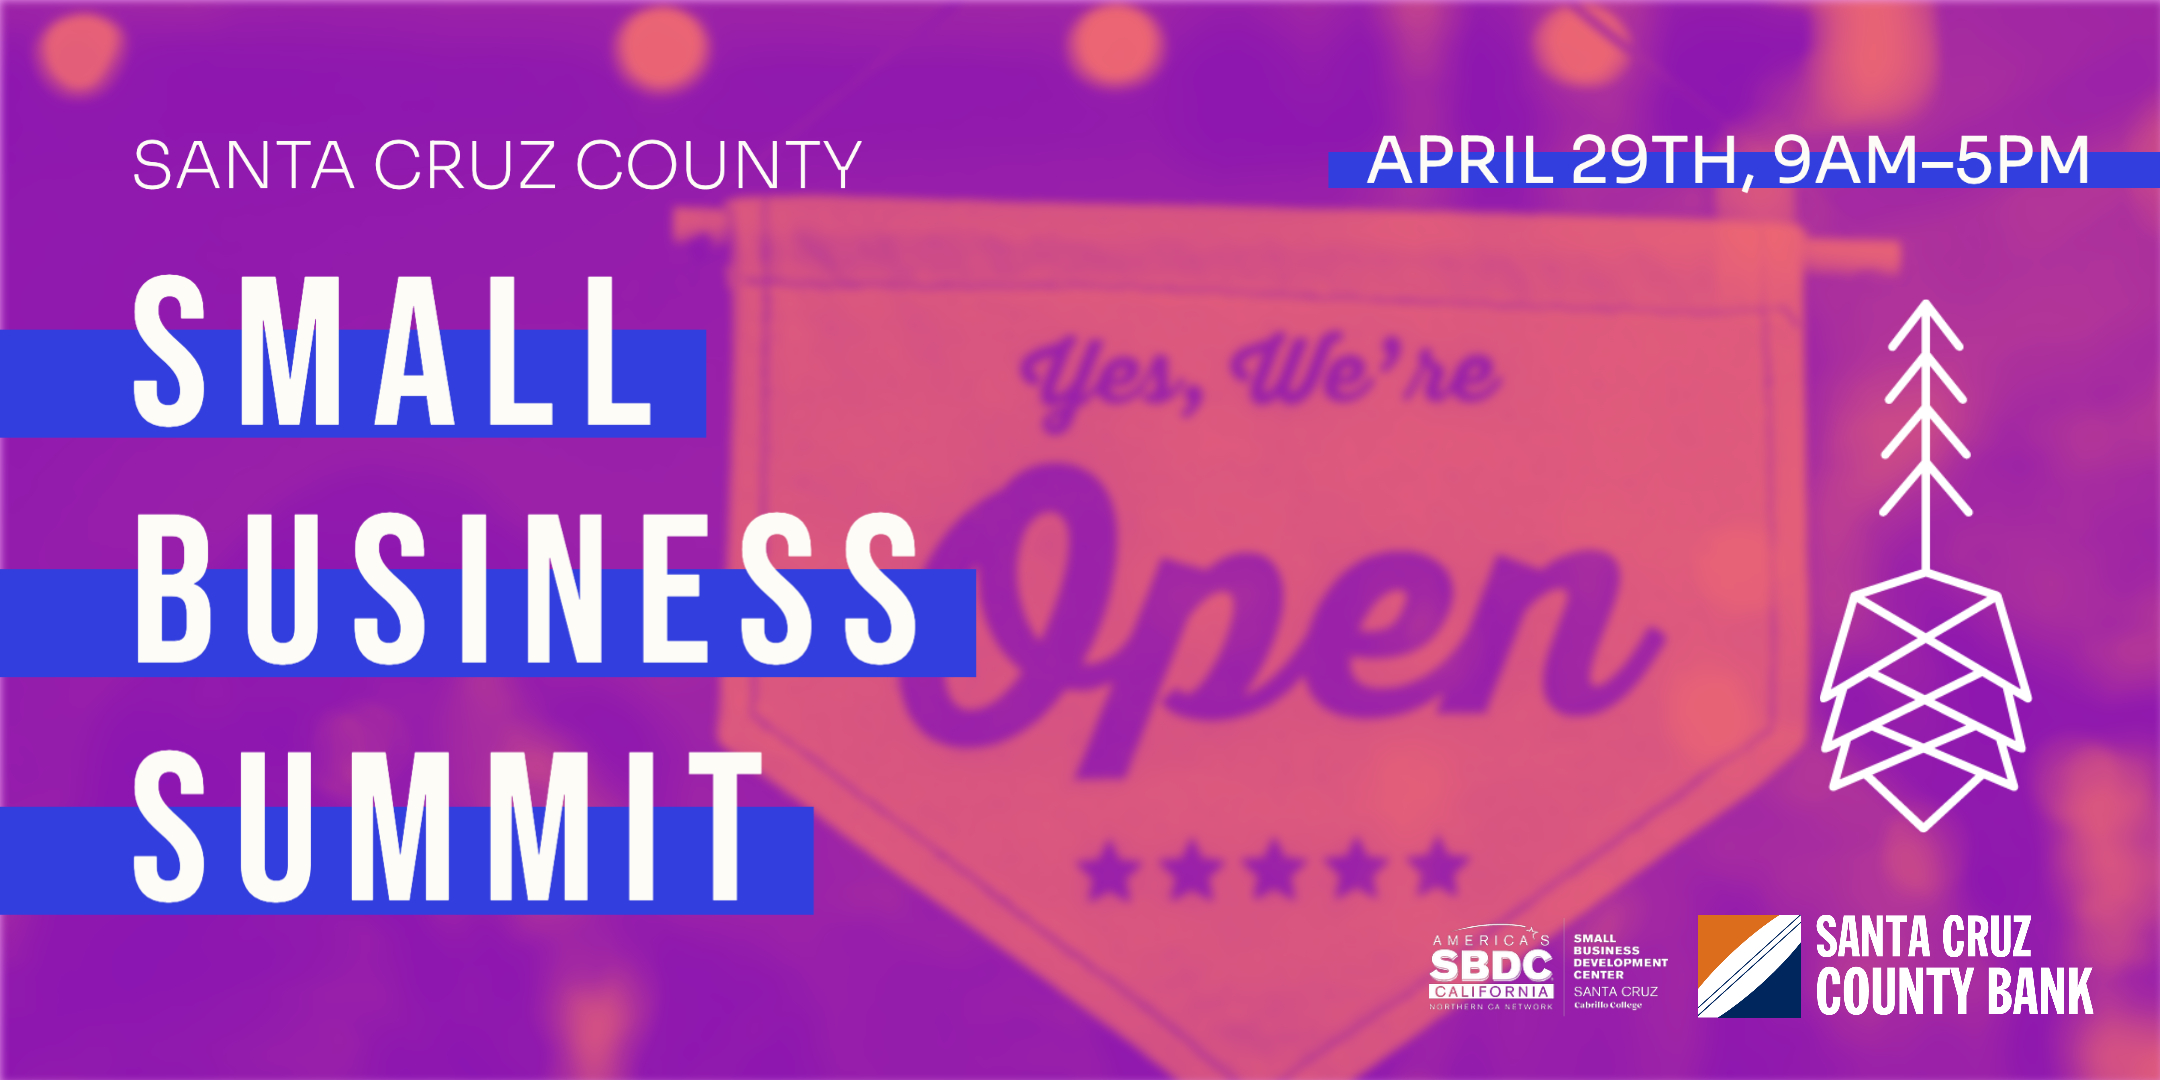 Santa Cruz County Small Business Summit